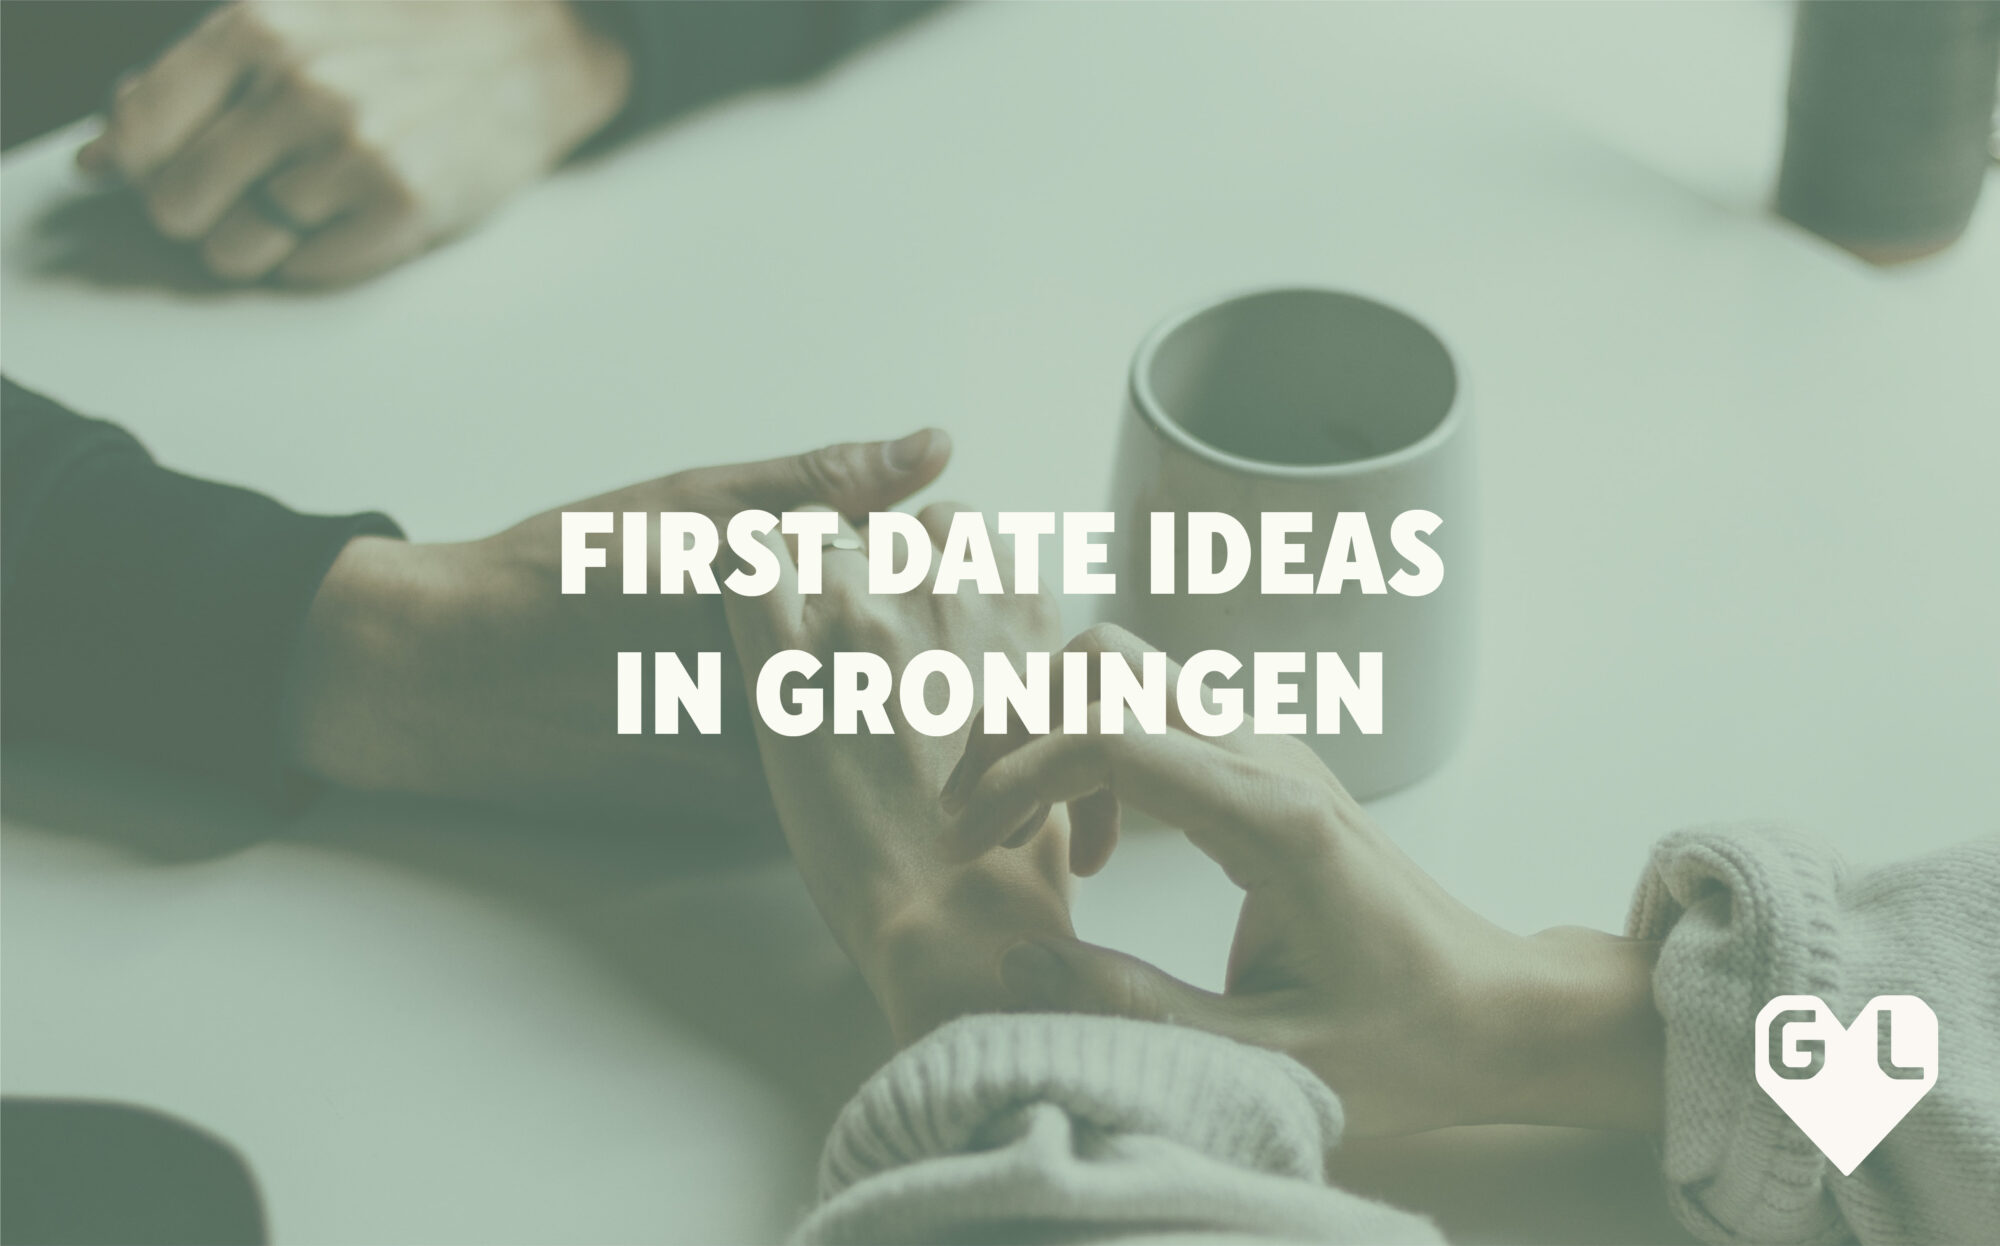 First date ideas in Groningen